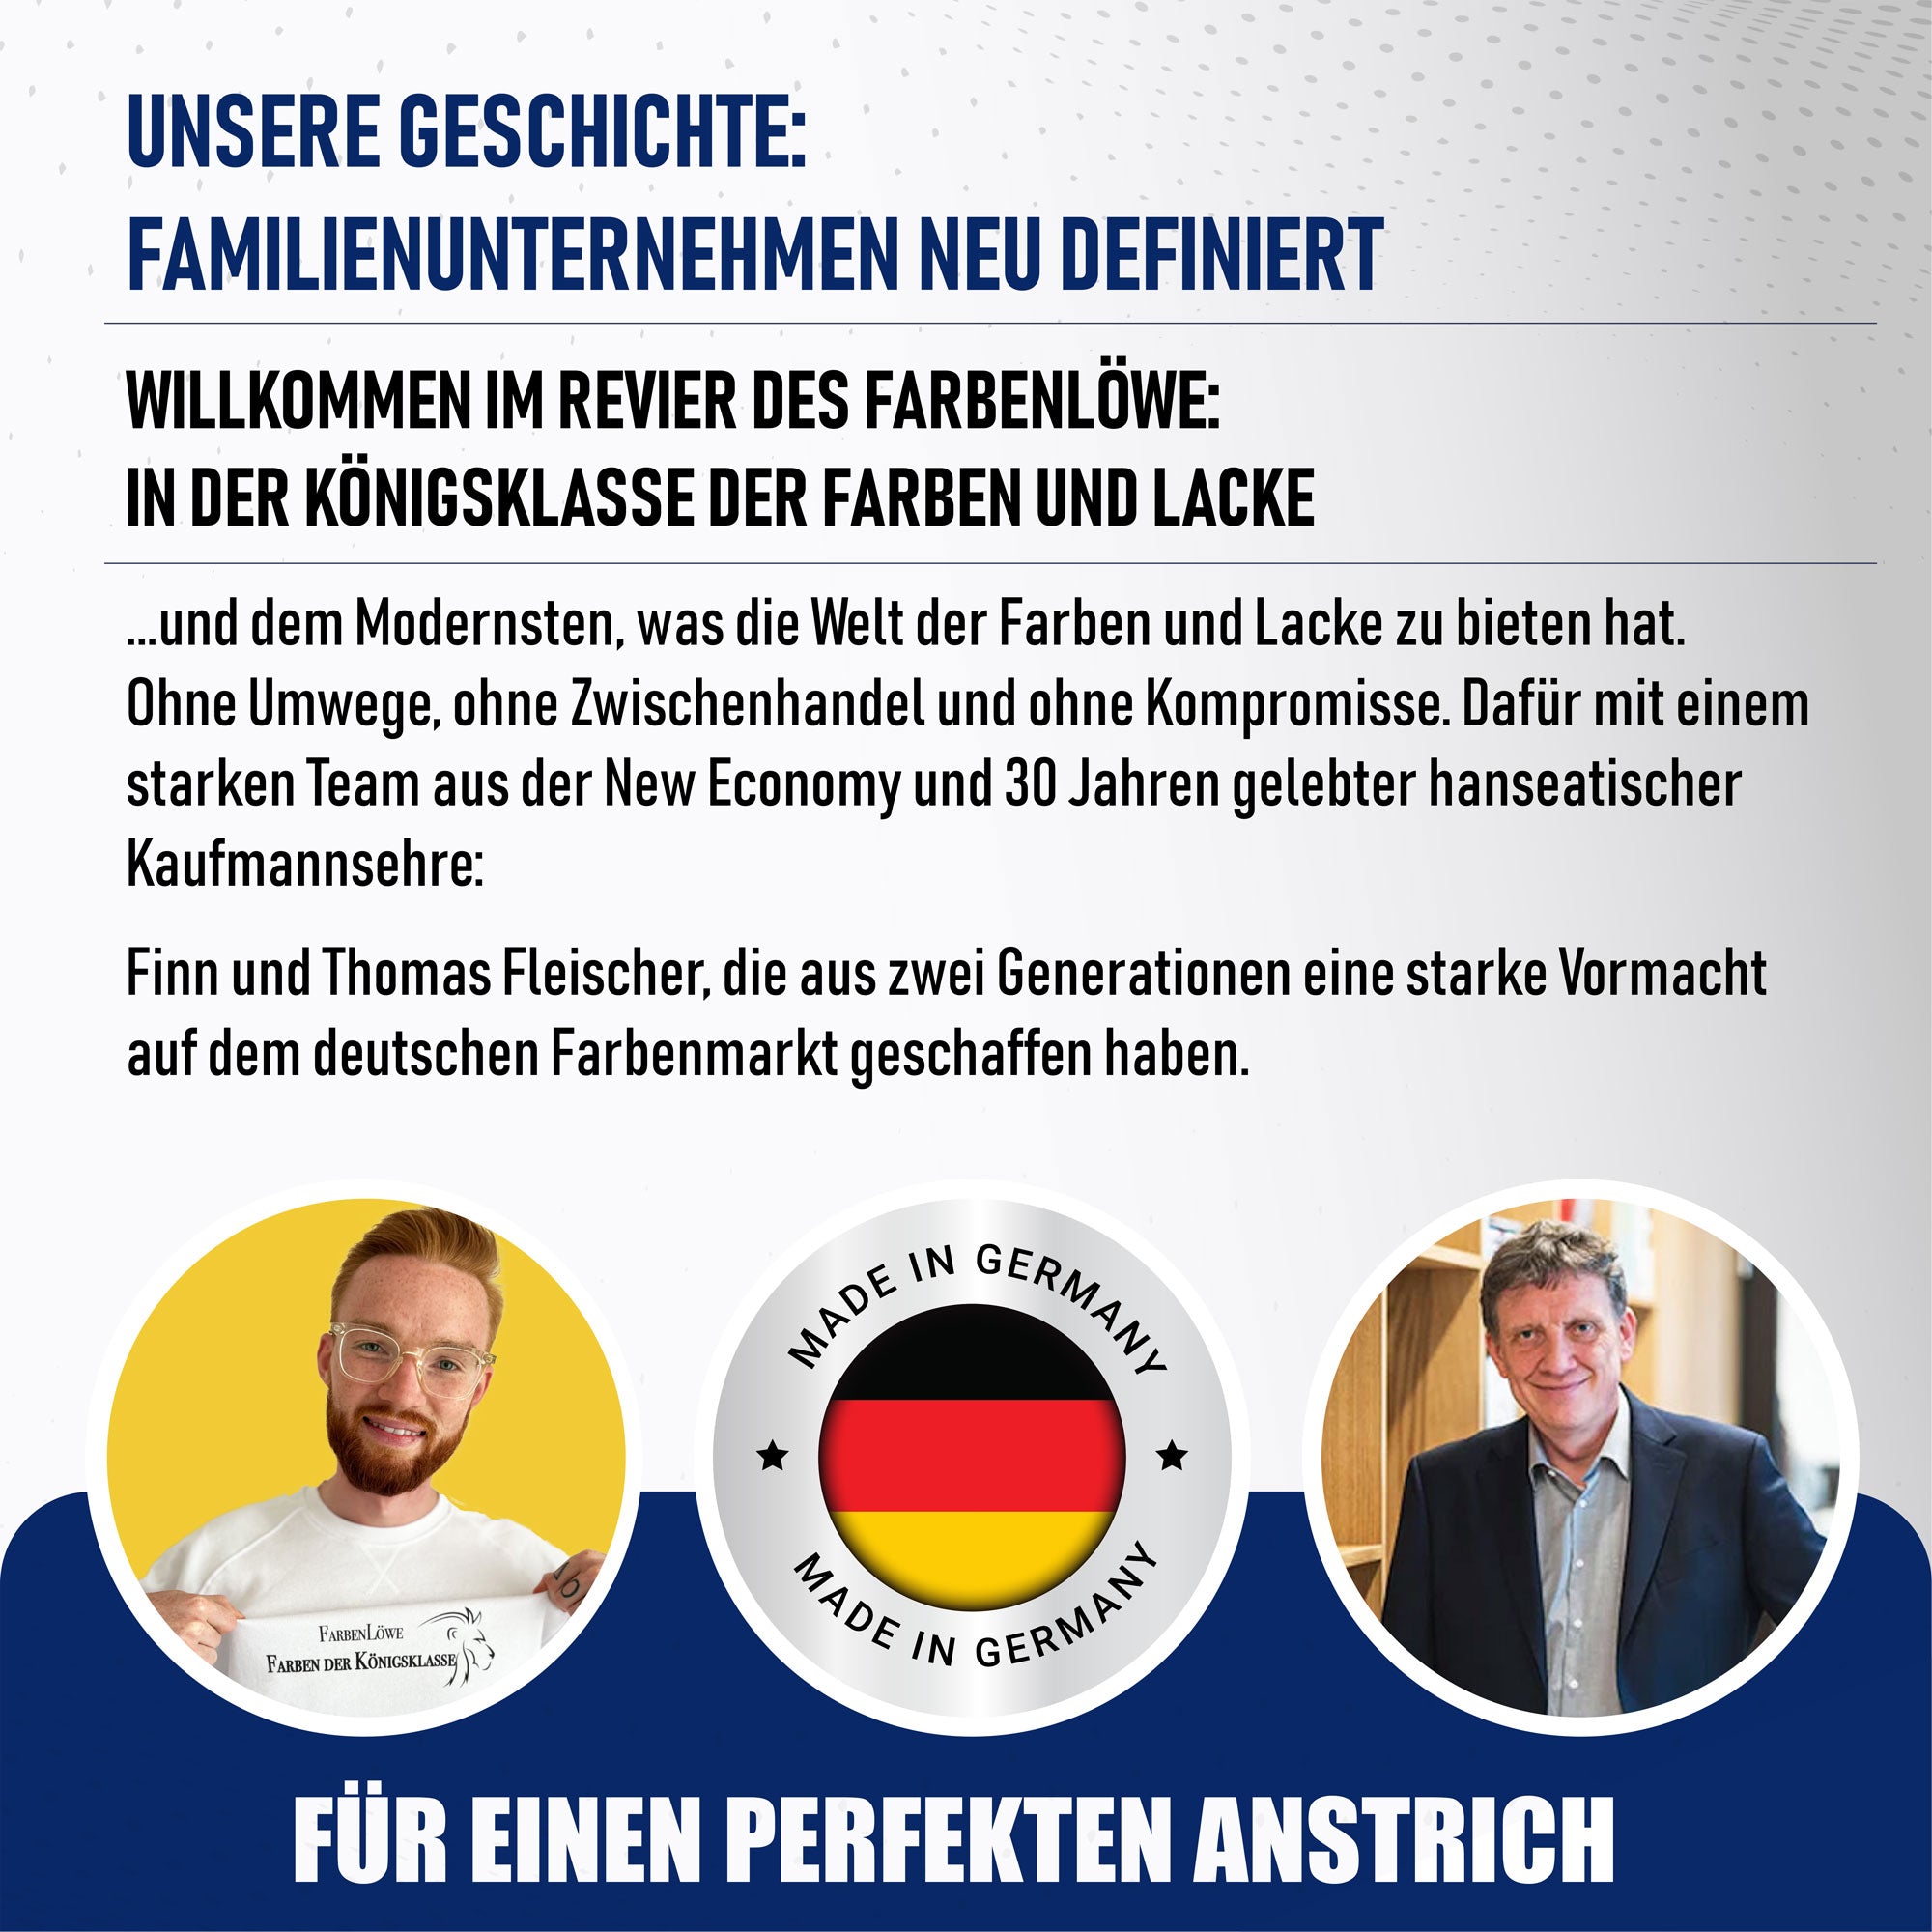 Hamburger Lack-Profi 2K Autolack in Gelbgrün RAL 6018 mit Lackierset (X300) & Verdünnung (1 L) - 30% Sparangebot